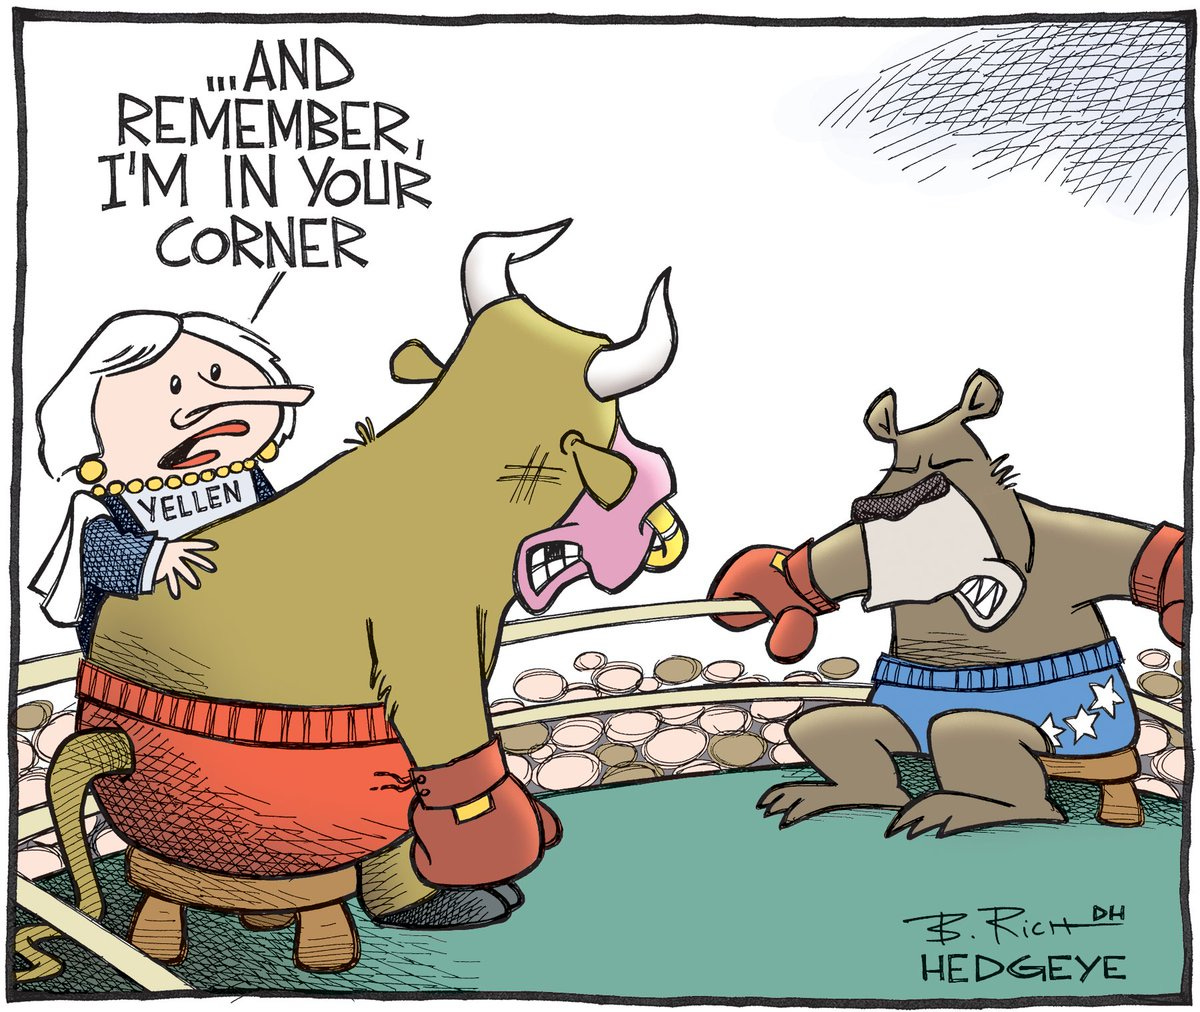 Cartoon of the day: raging bull via @hedgeye #stocks $spy #yellen #fed #markets - scoopnest.com